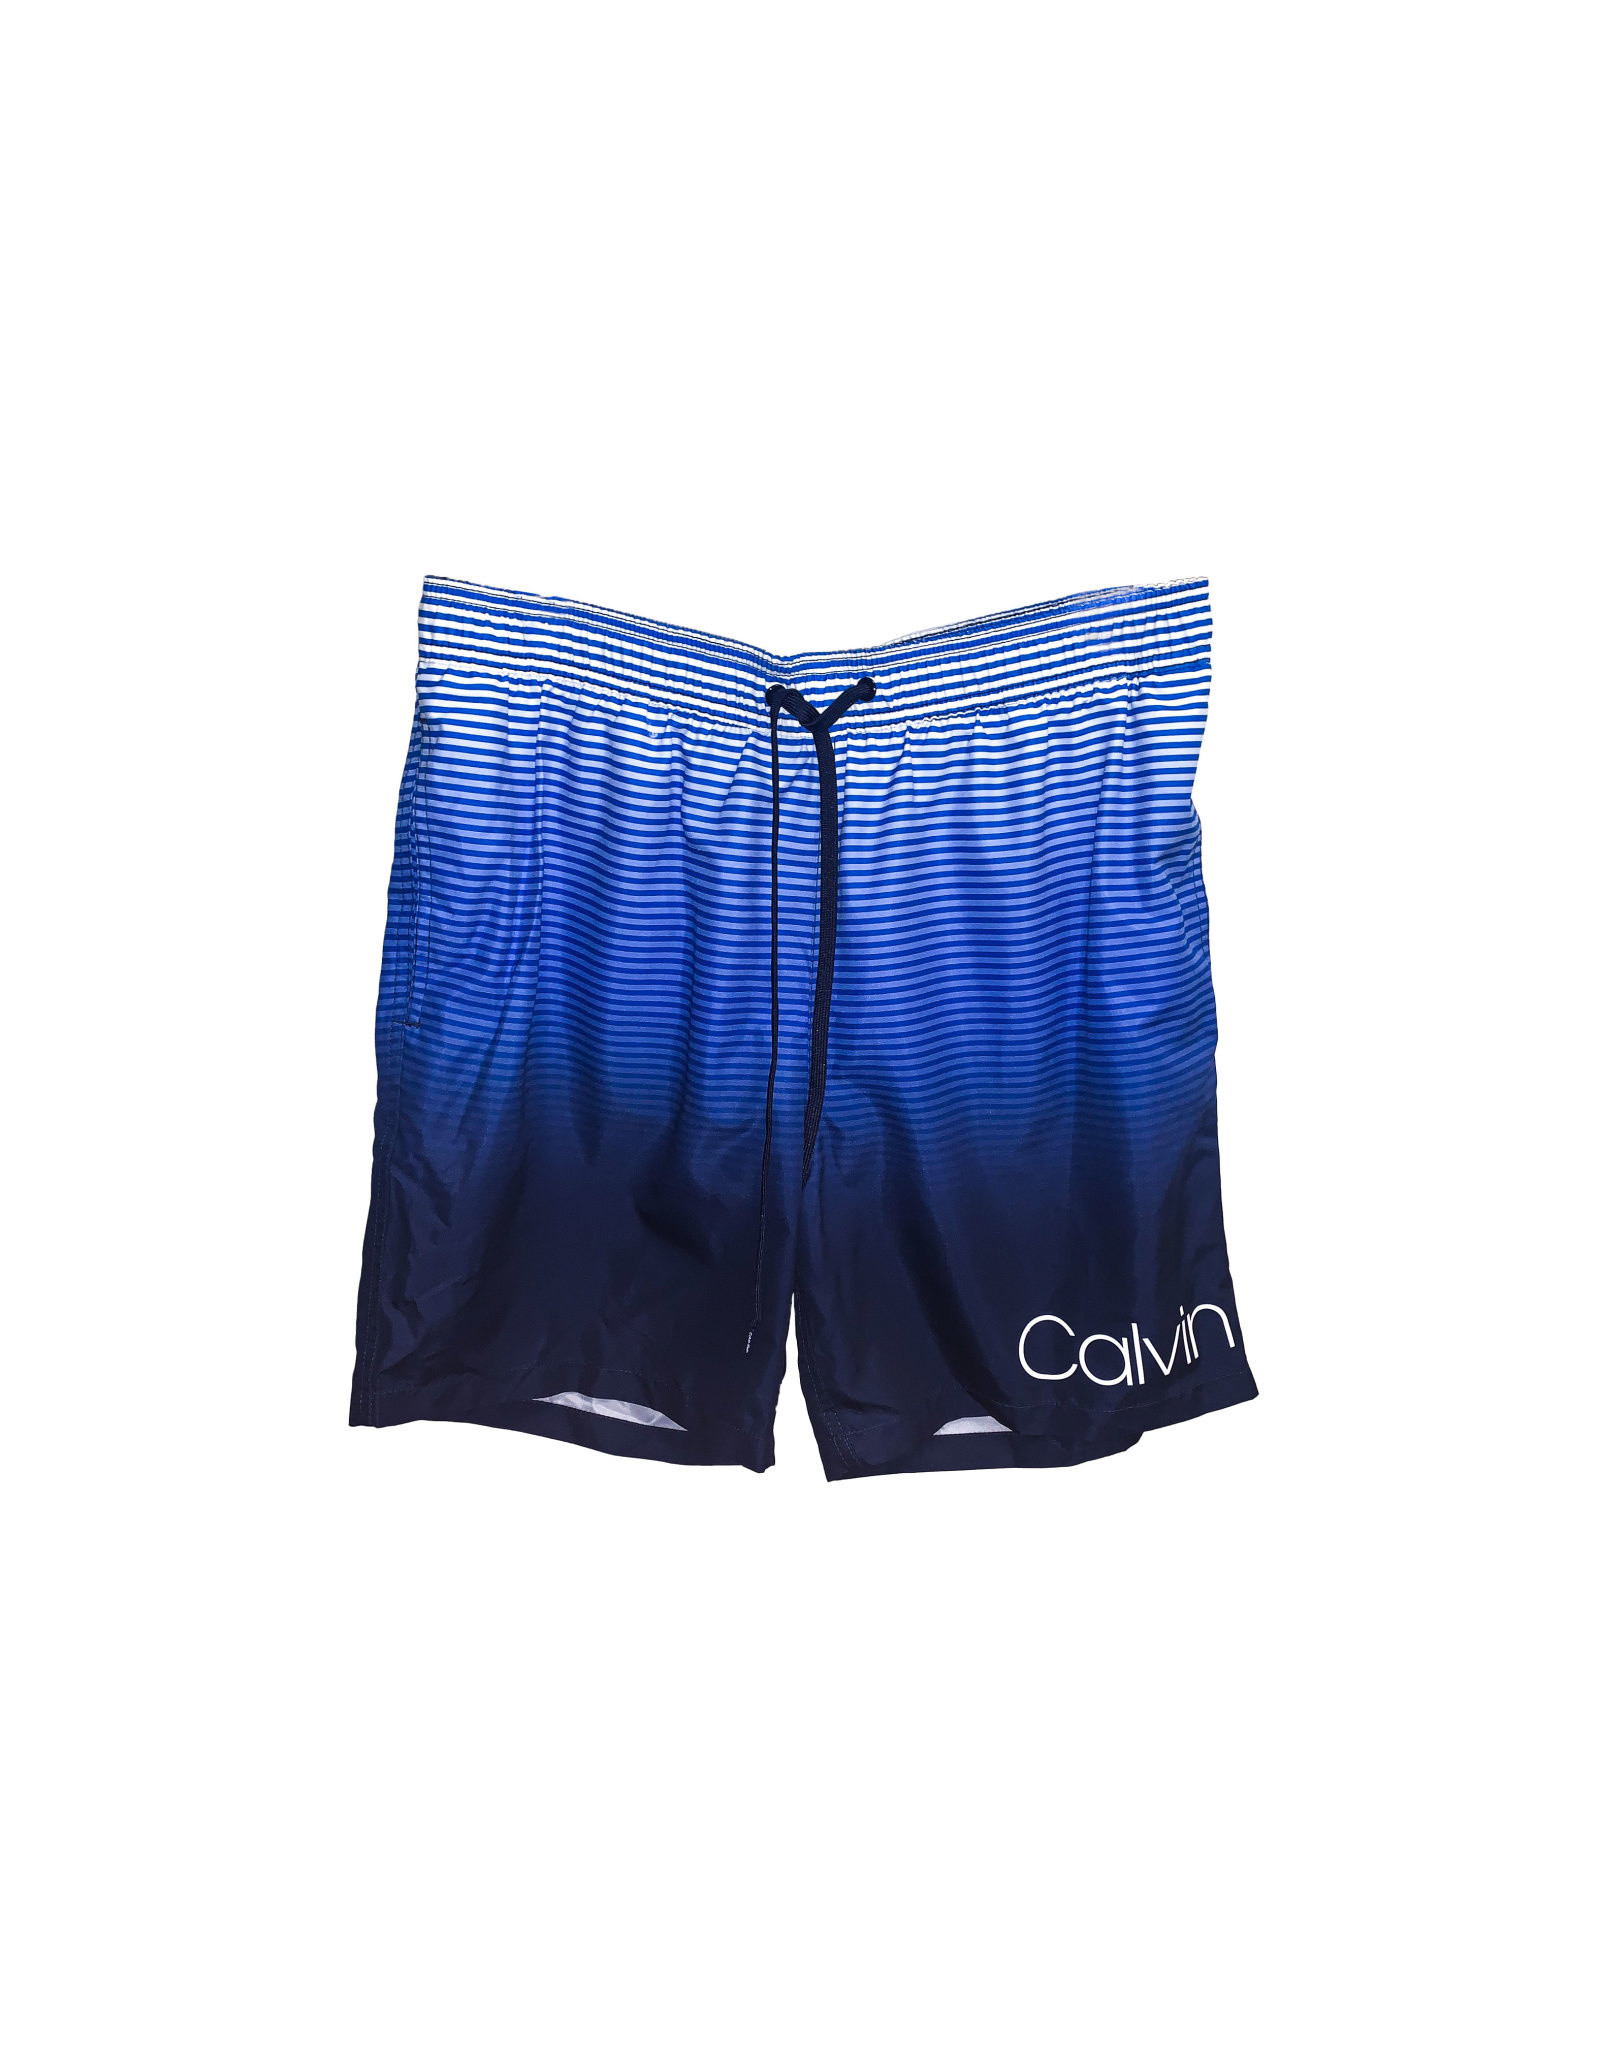 Calvin Klein CALVIN KLEIN  Men'sswimwear   Shorts Size L